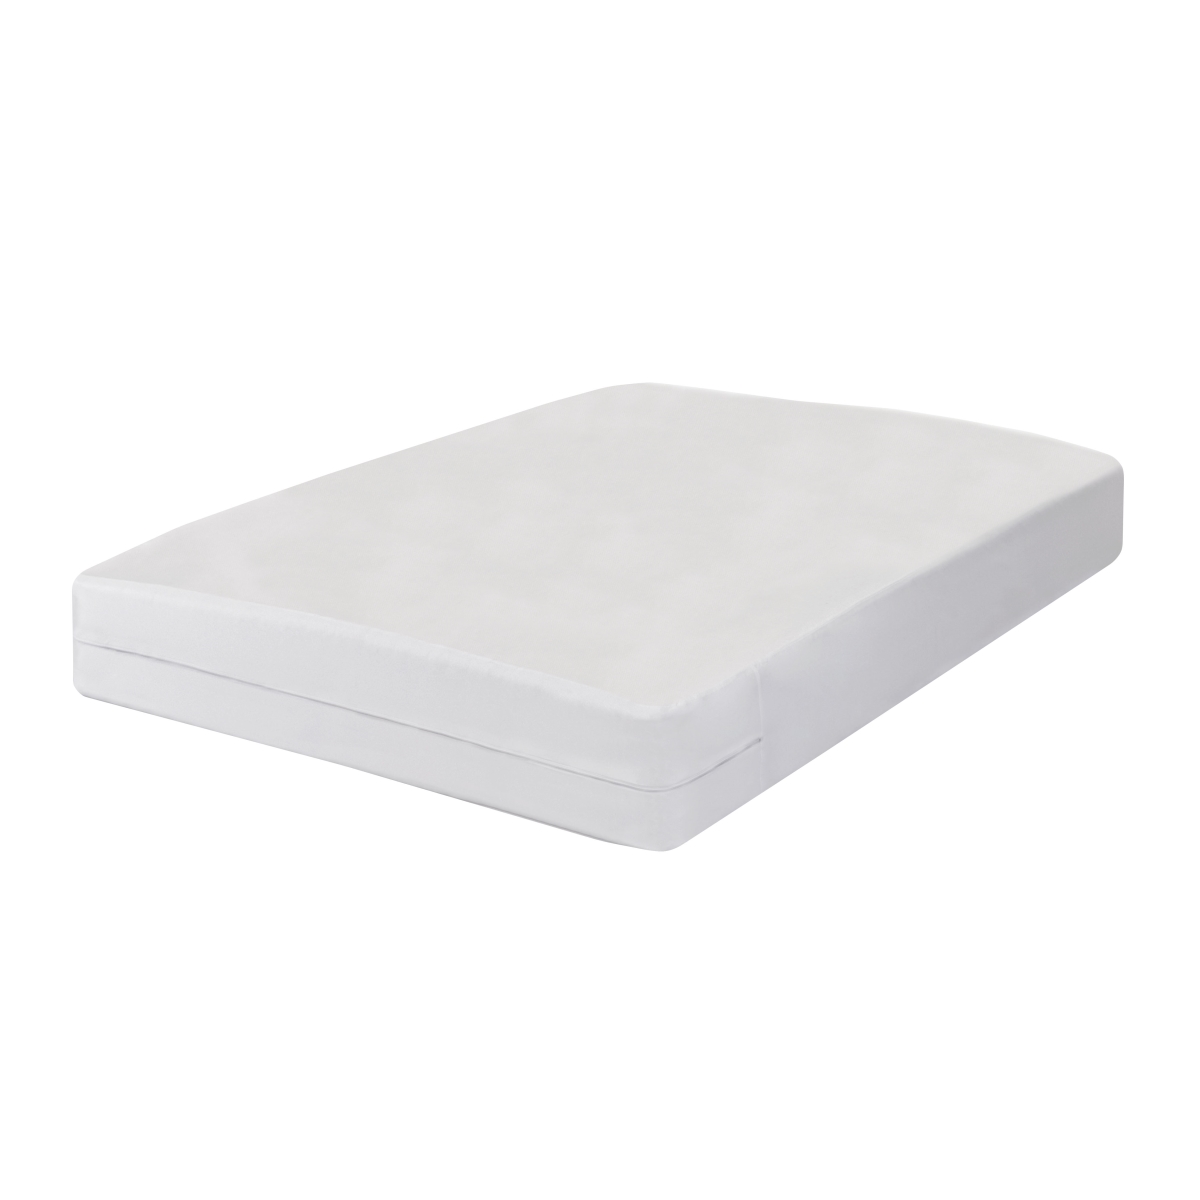 Fre147xxwhit02 Luxury Cotton Rich Bed Bug Blocker Zippered Mattress Protector White - Full